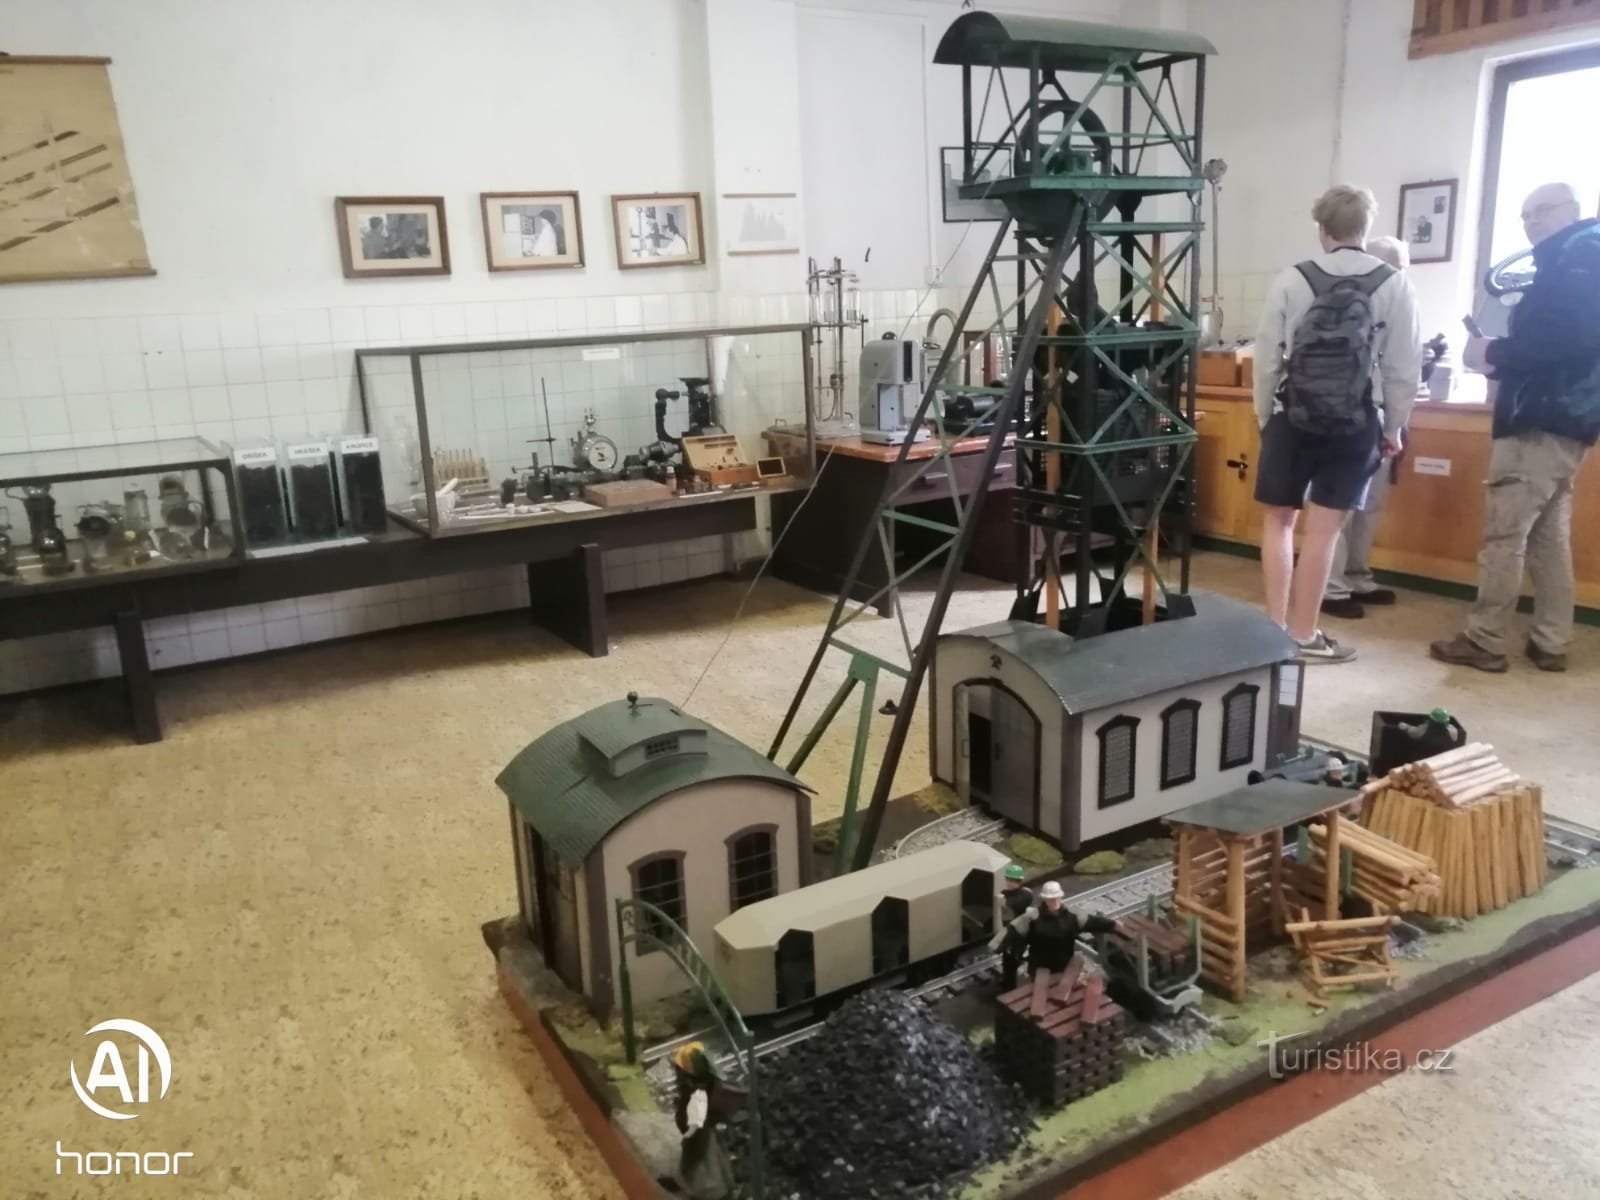 Mining open-air museum Mayrau